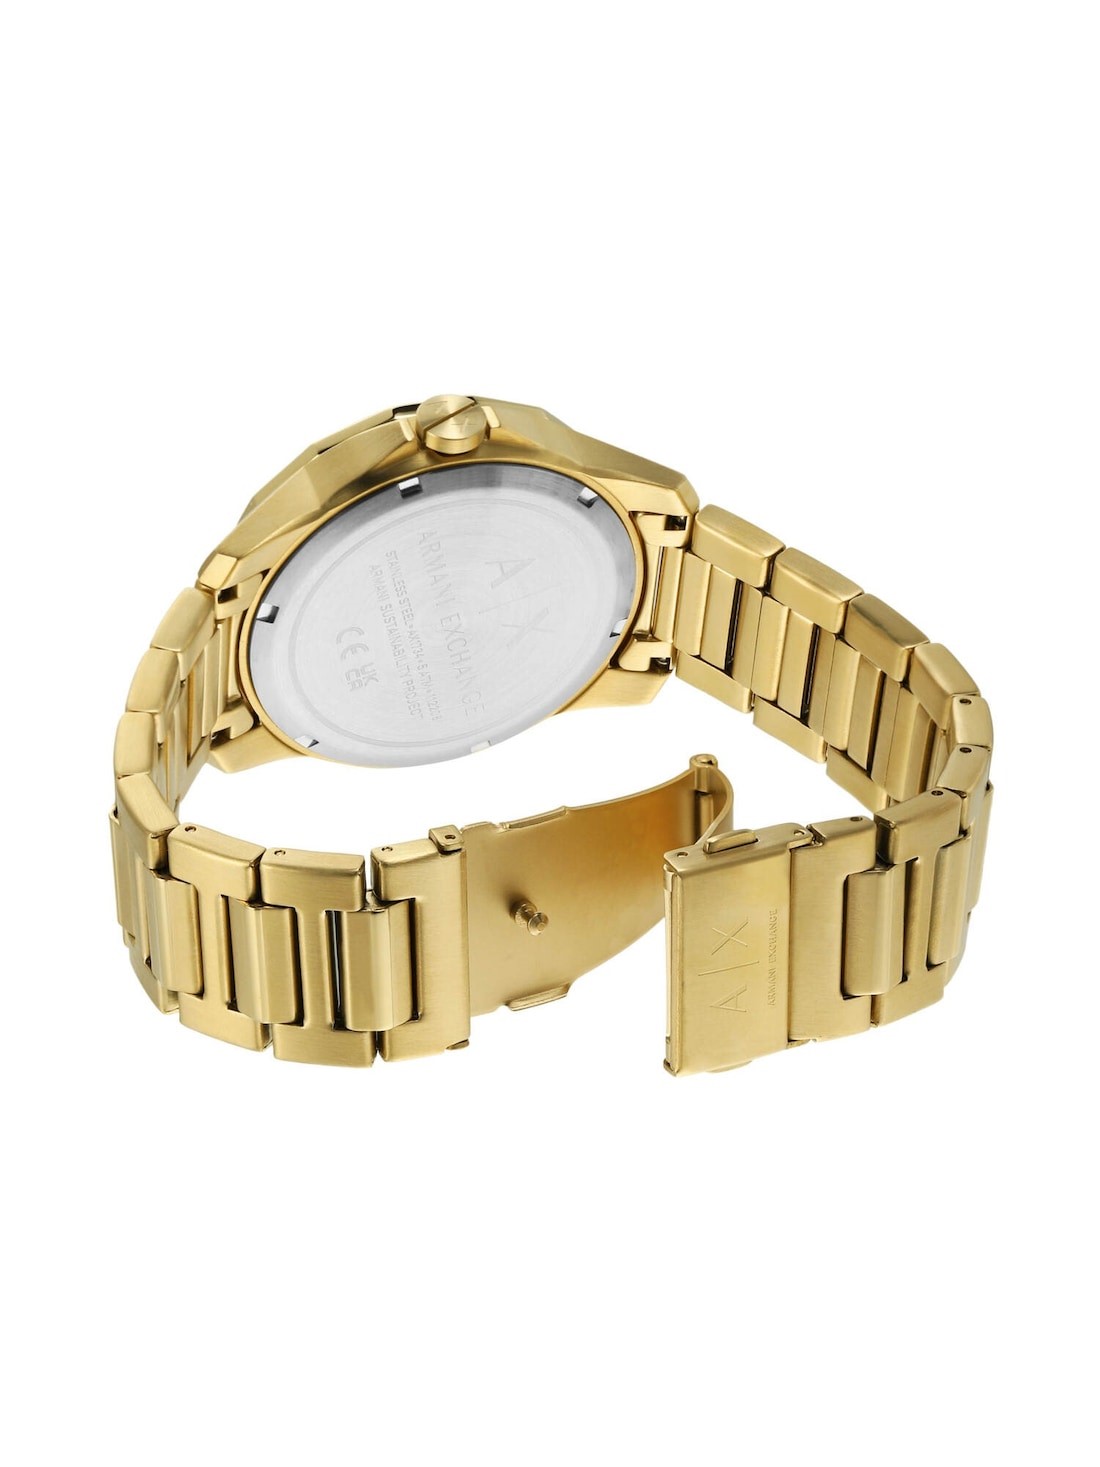 Armani Exchange Gold Watch AX1734 - Watch Station India